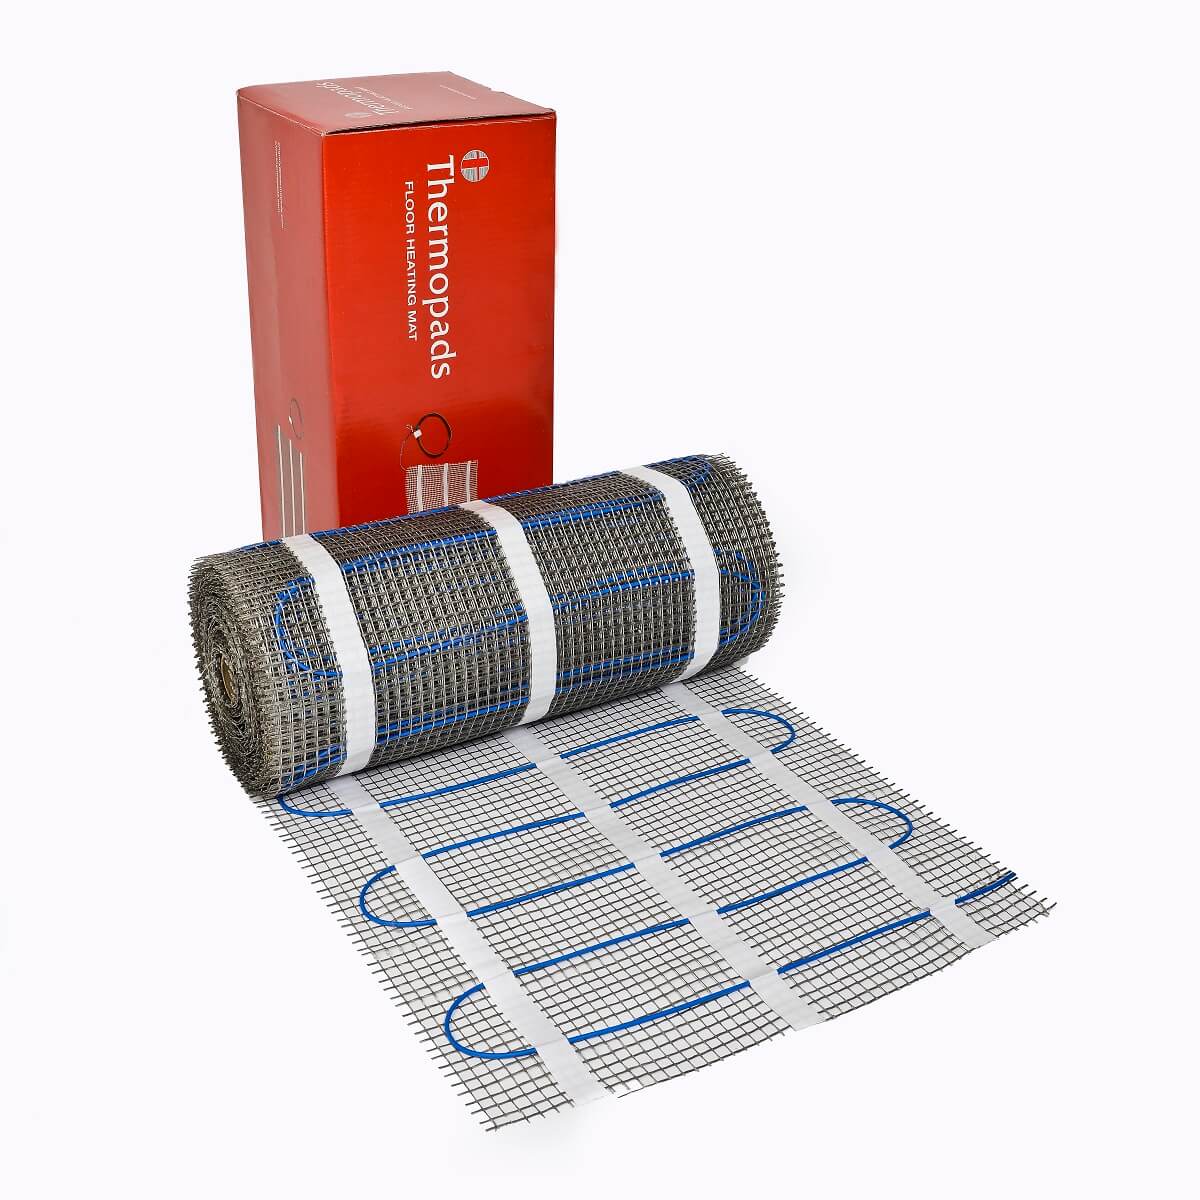 Thermopads Undertile Heating Mat - 7m2 1400W (11179)